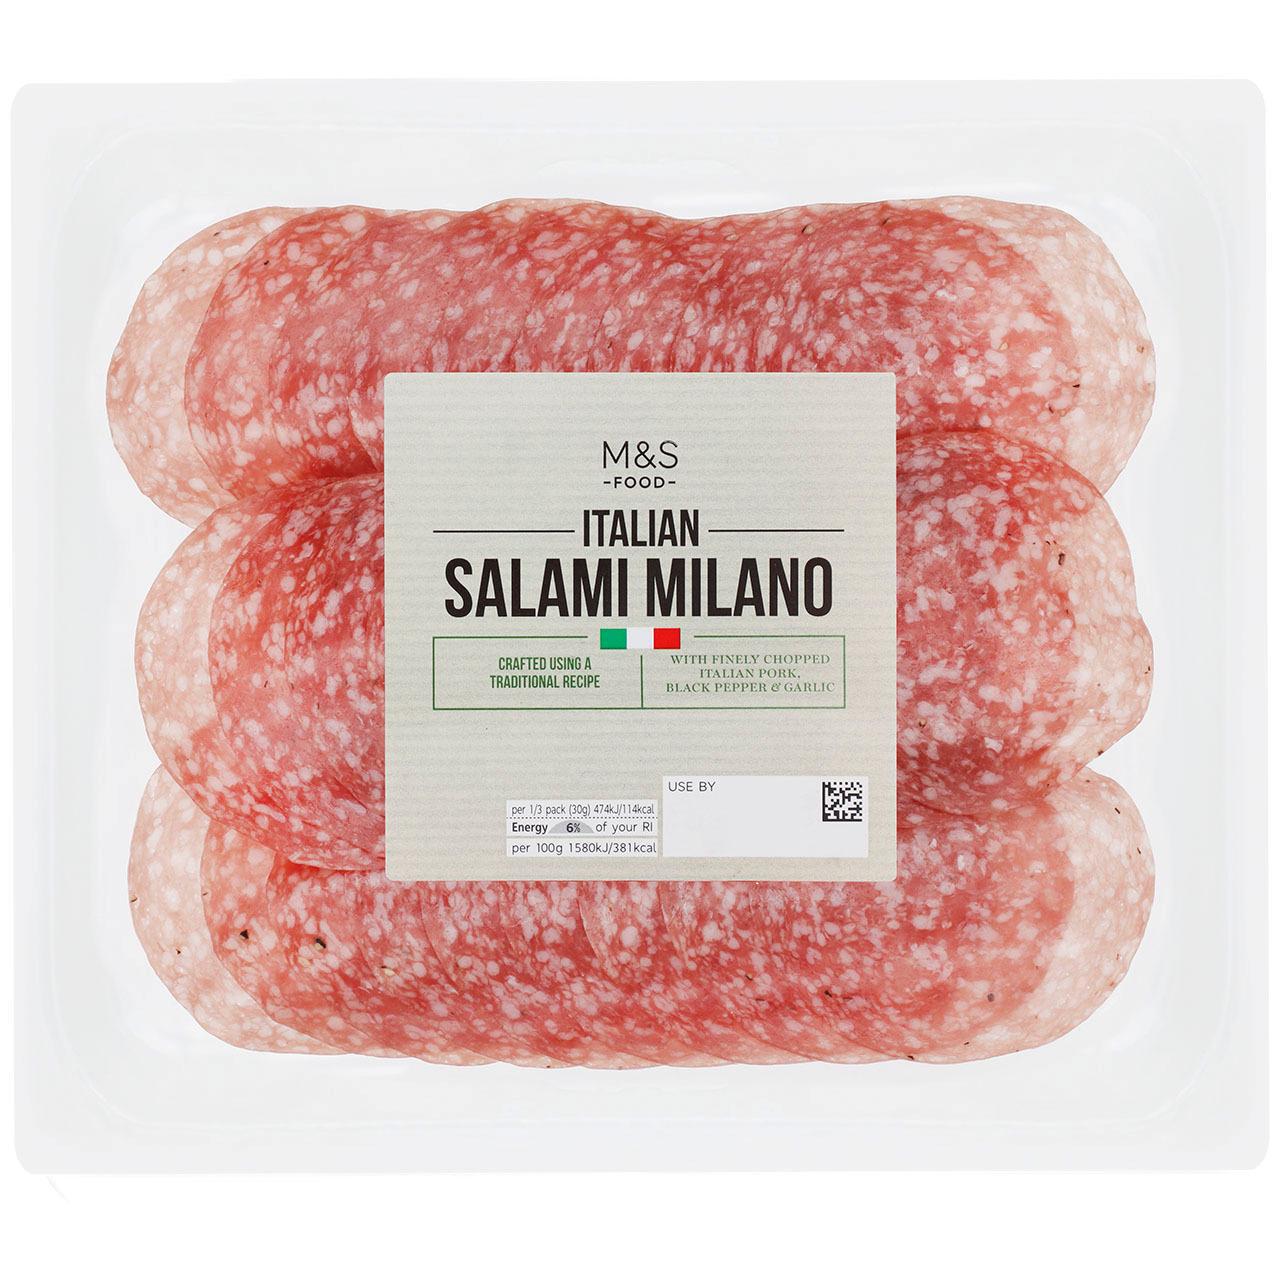 M&S Sliced Italian Salami Milano 90g